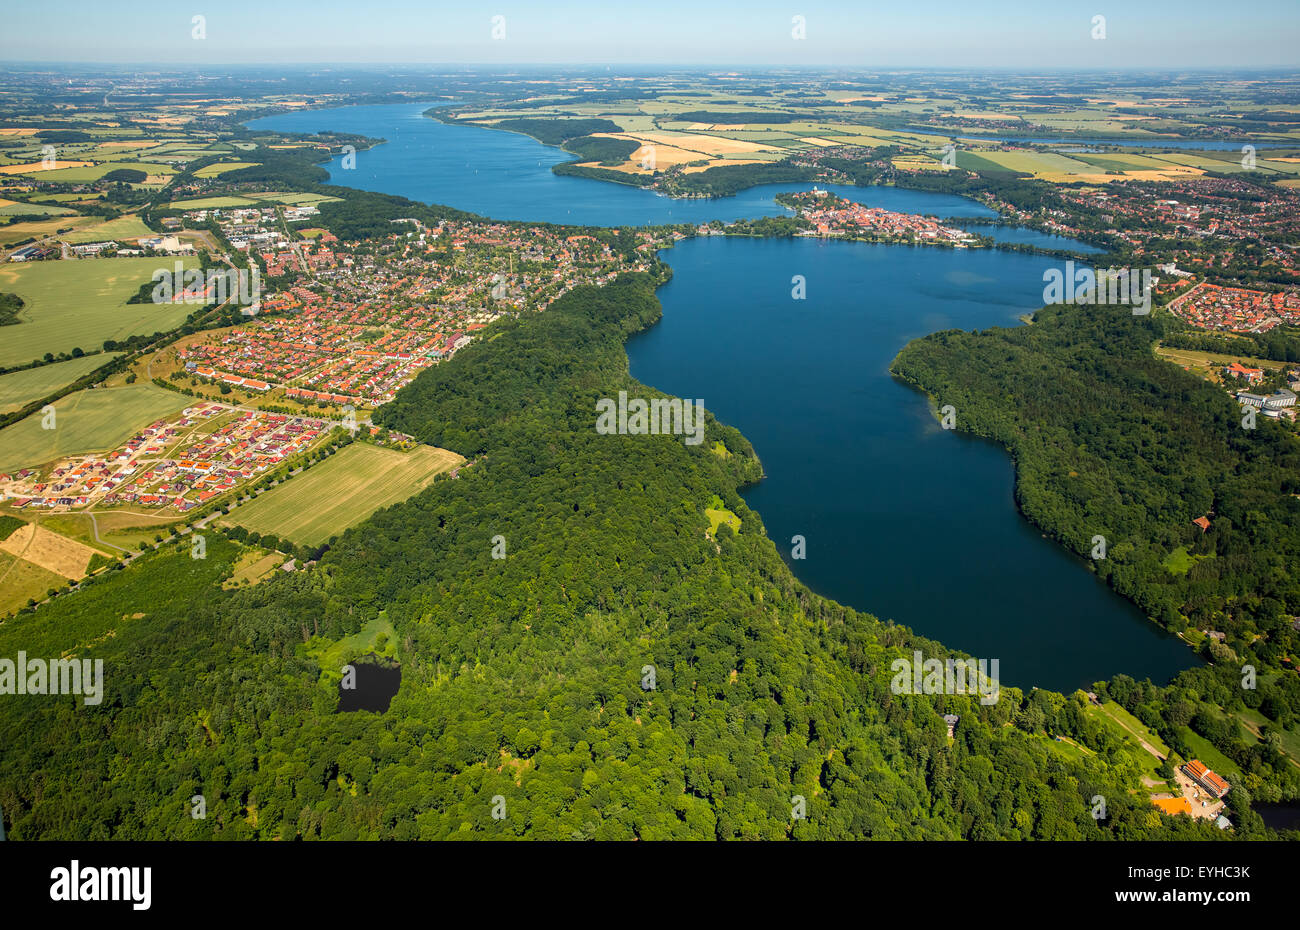 Ratzeburger vedere il lago, Domsee, Küchensee, Fredeburg, Baia di Lubecca, città anseatica, Schleswig-Holstein, Germania Foto Stock